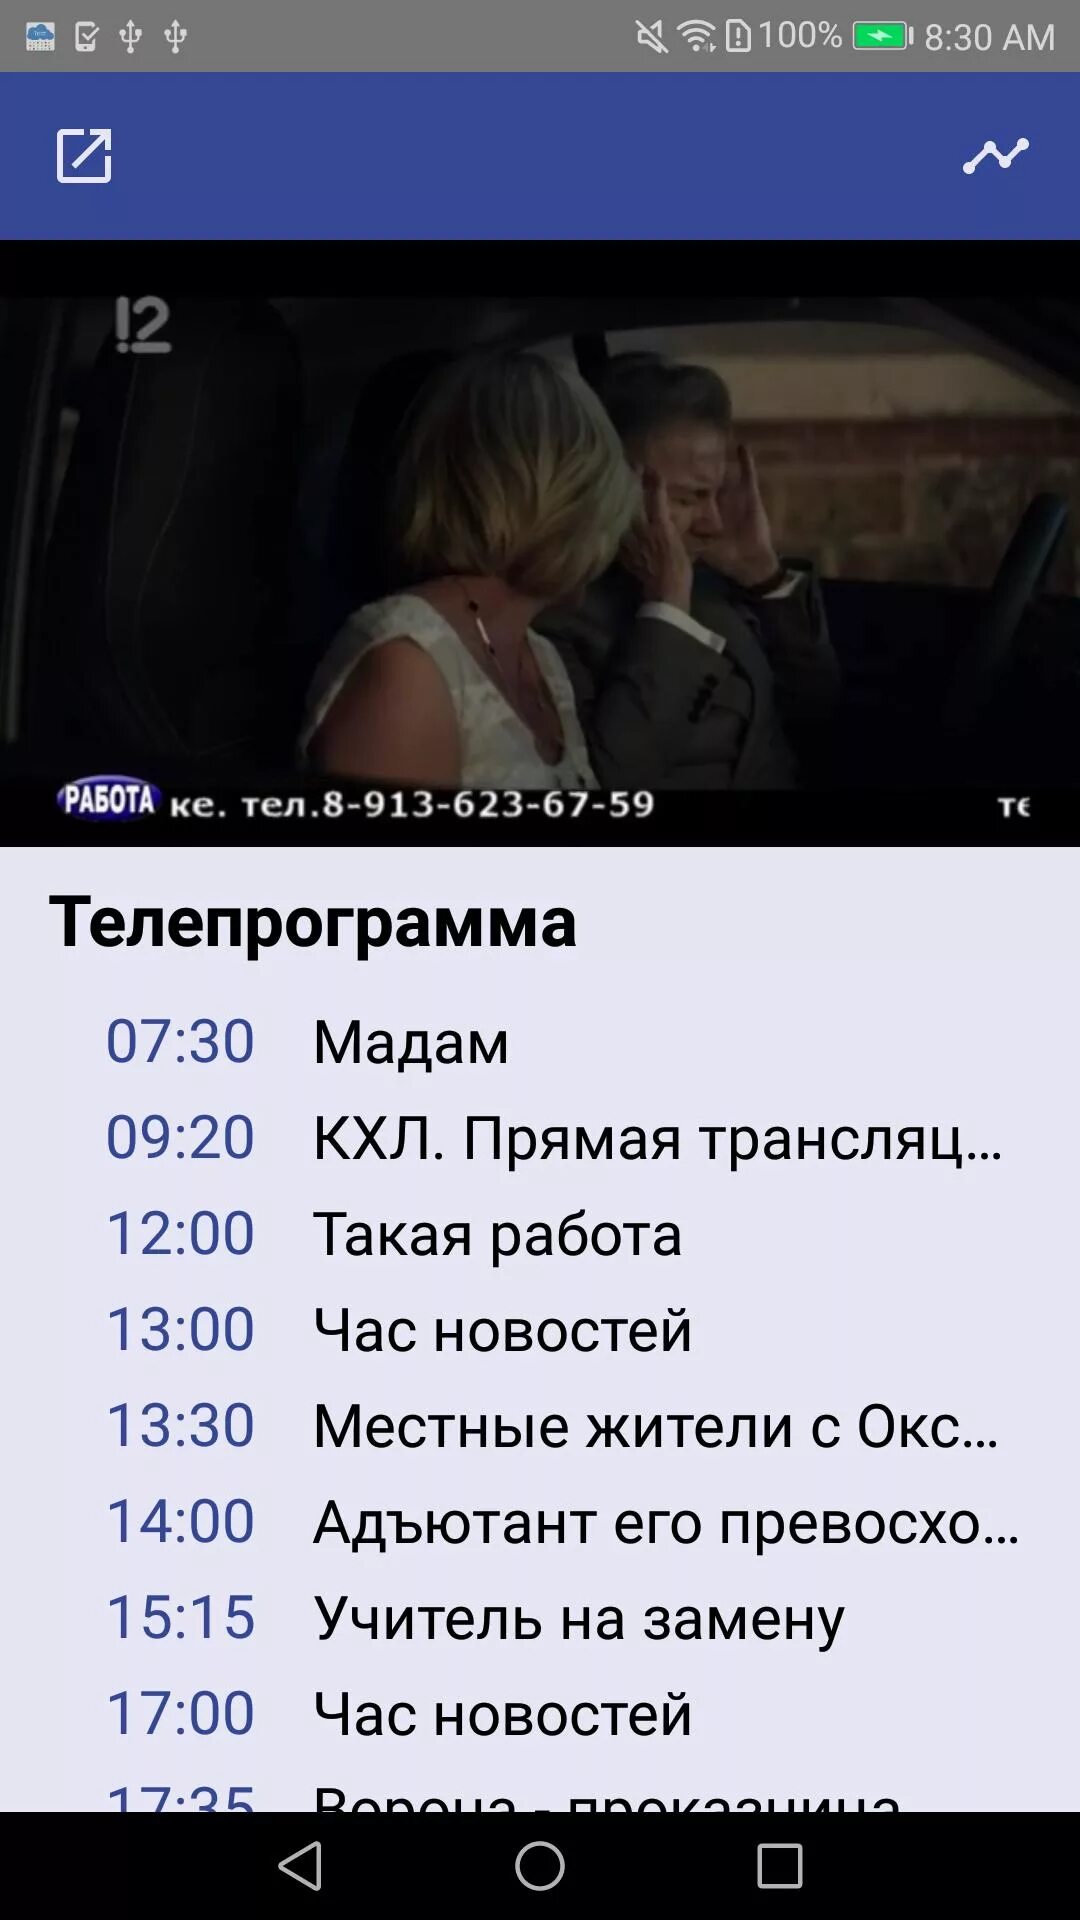 12 Канал Омск. Телеканал ОРТРК 12 канал. Программа Омск. ТВ программа Омск.